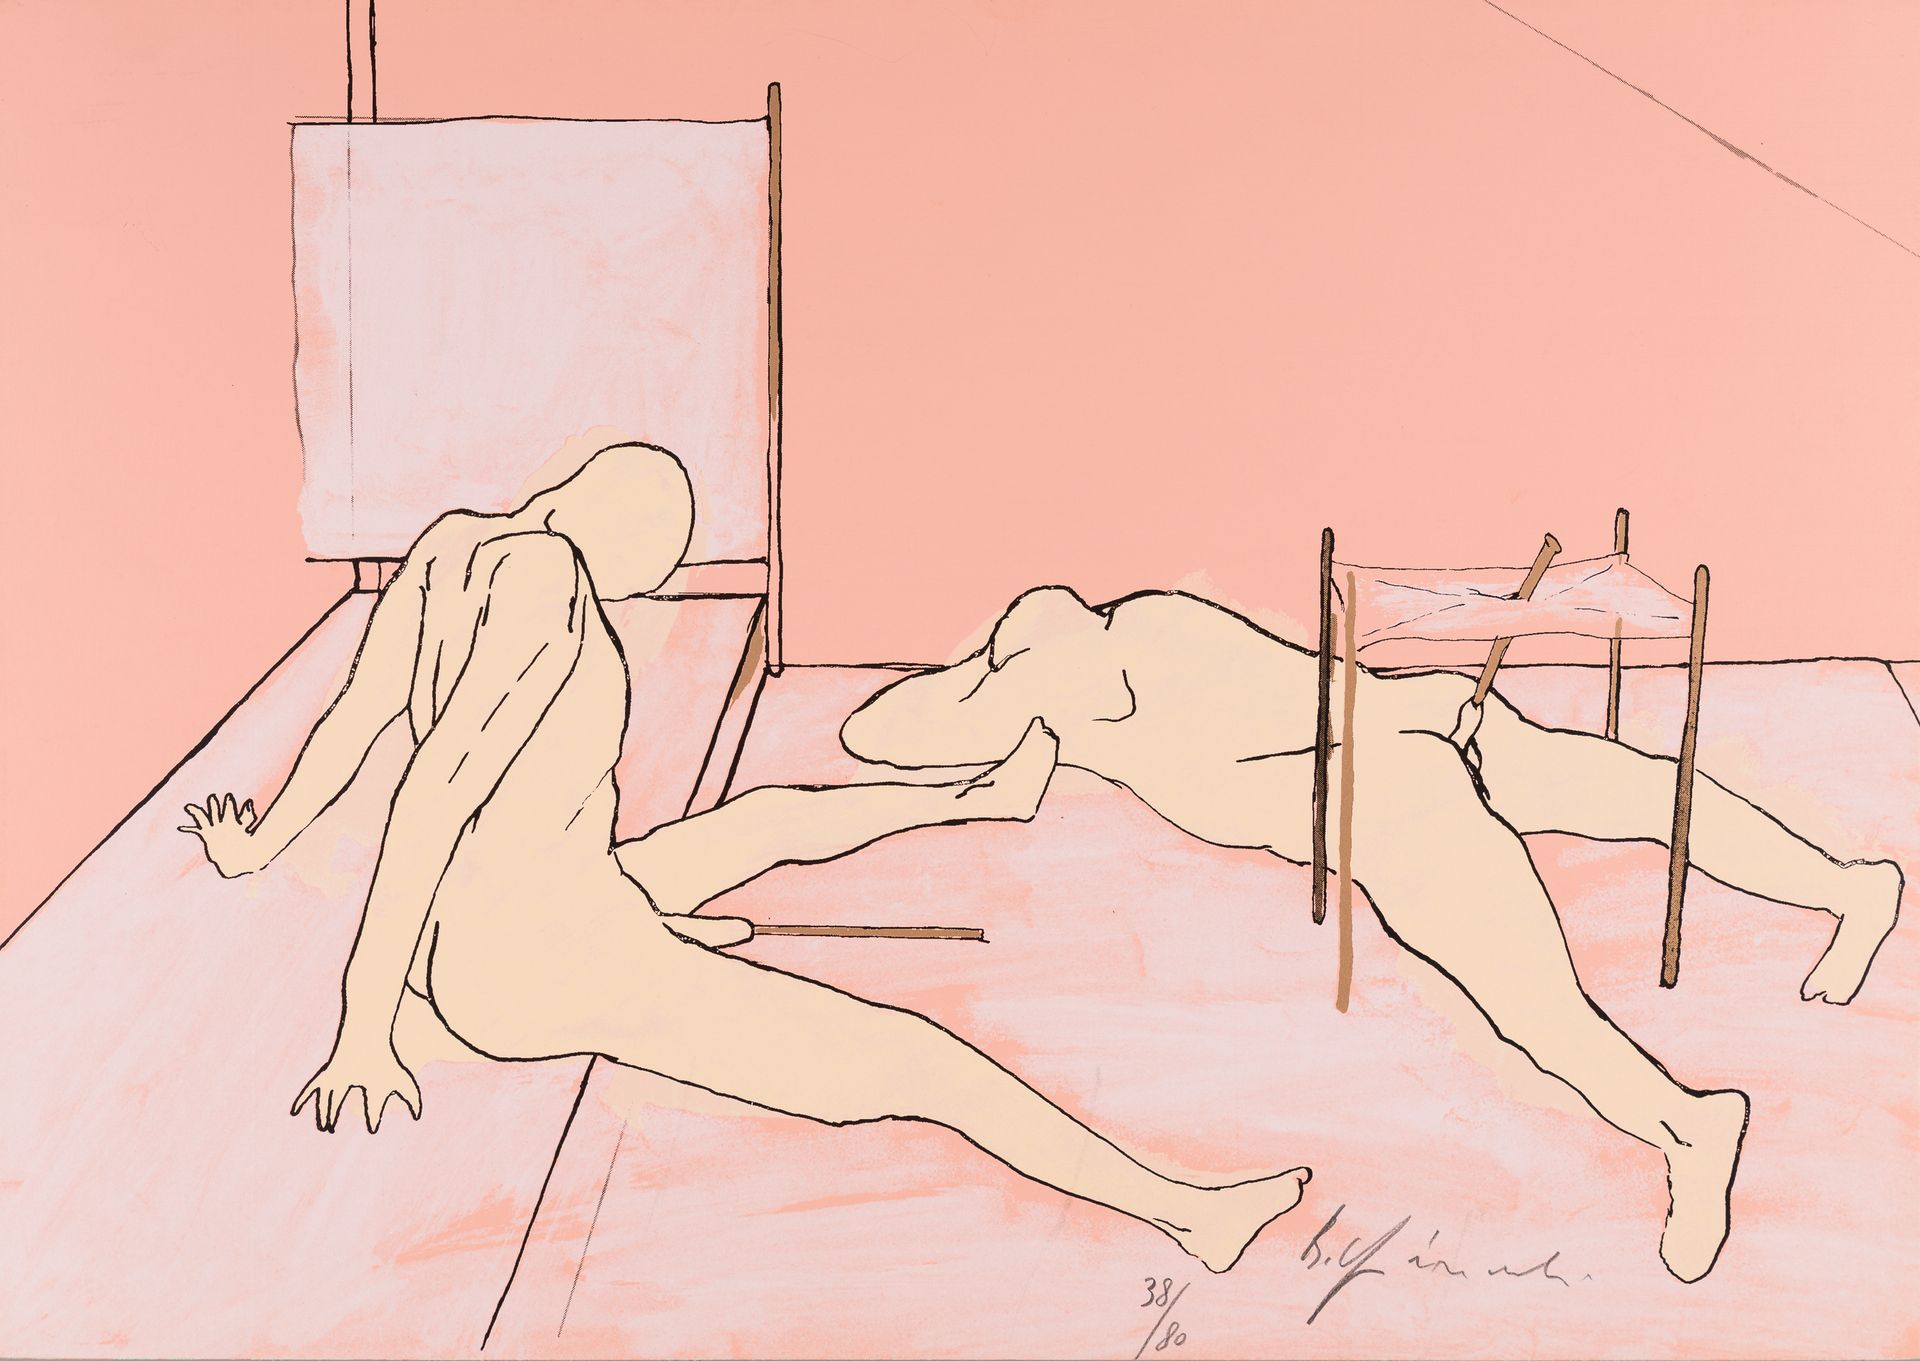 Gironcoli, Bruno 无题1969
纸上彩色丝网版画
右下方有签名和编号：38/80
34 x 48 cm